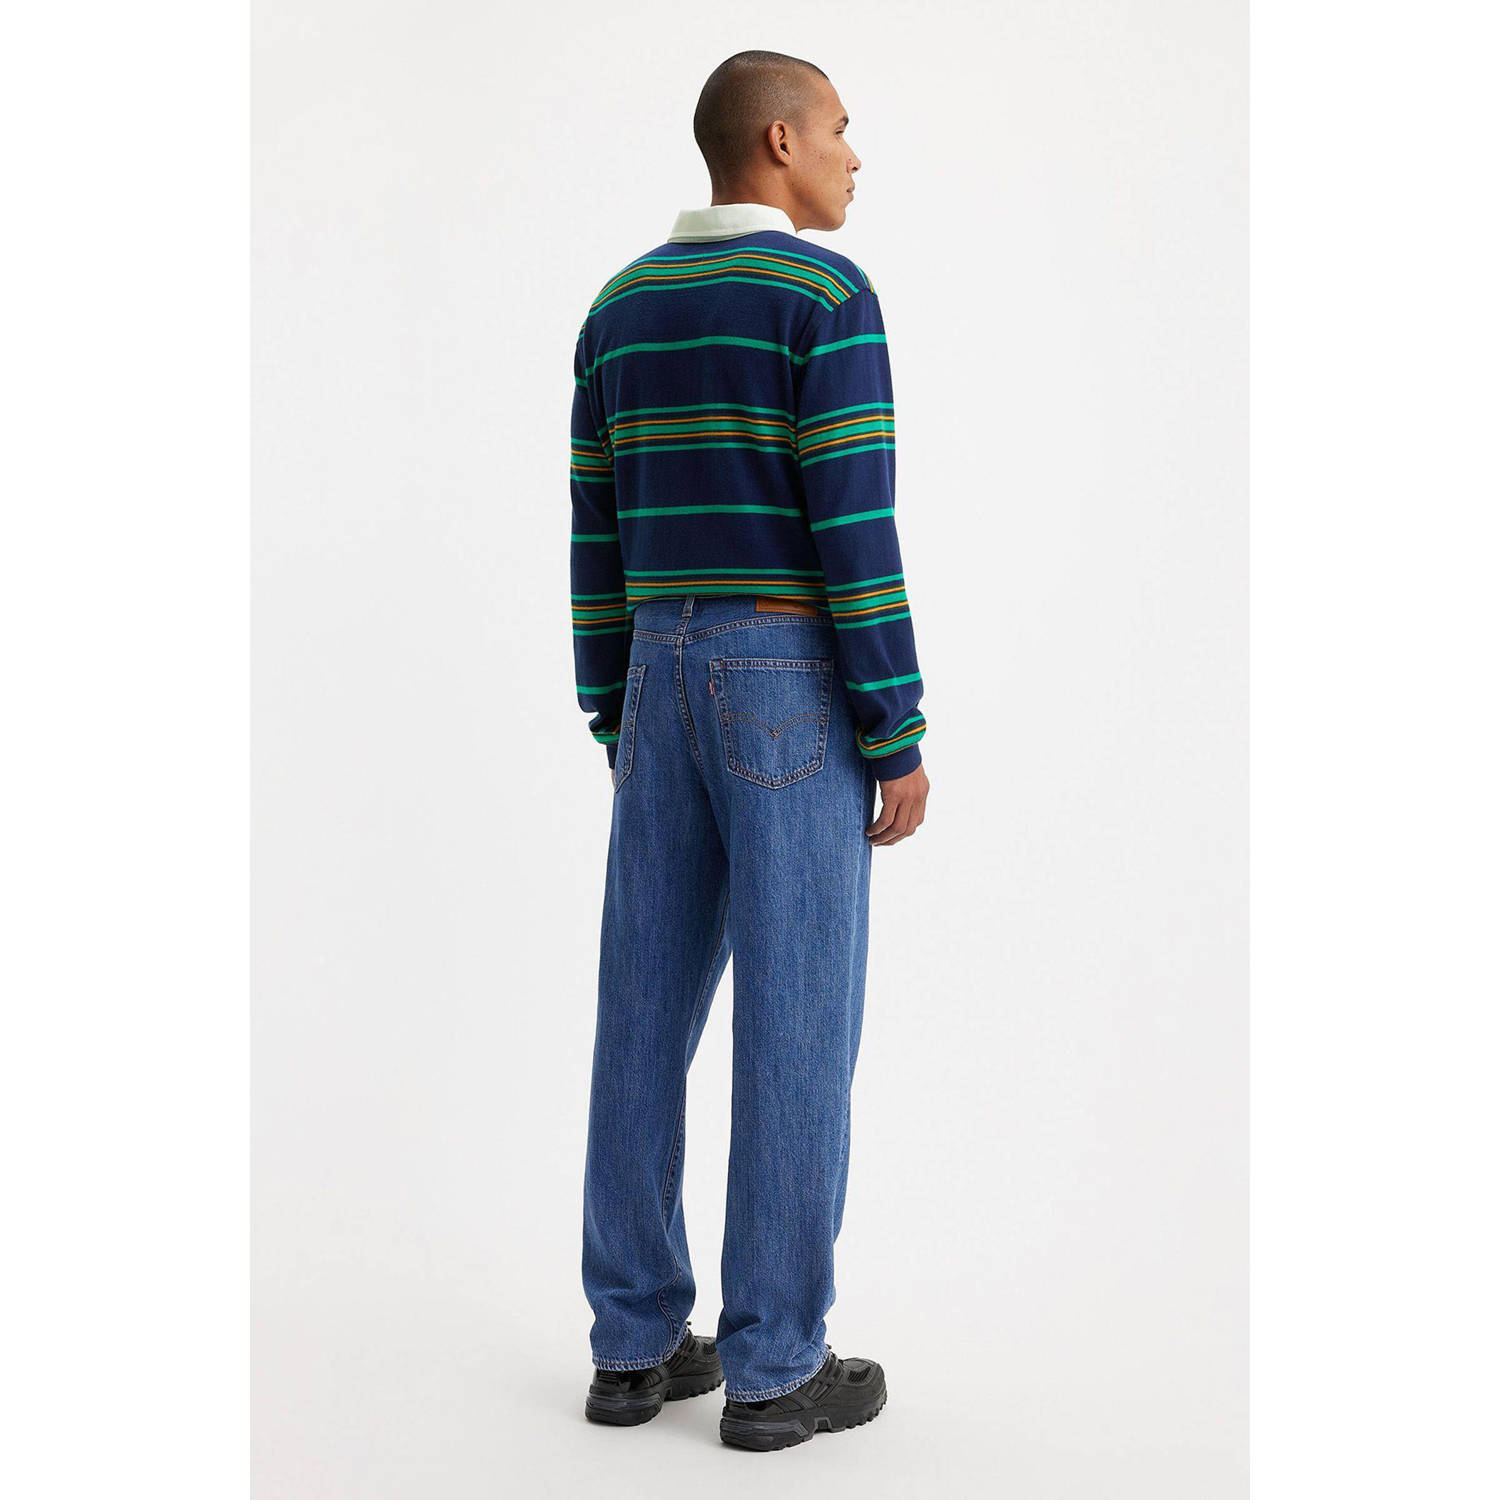 Levi's 568 loose fit jeans blauw